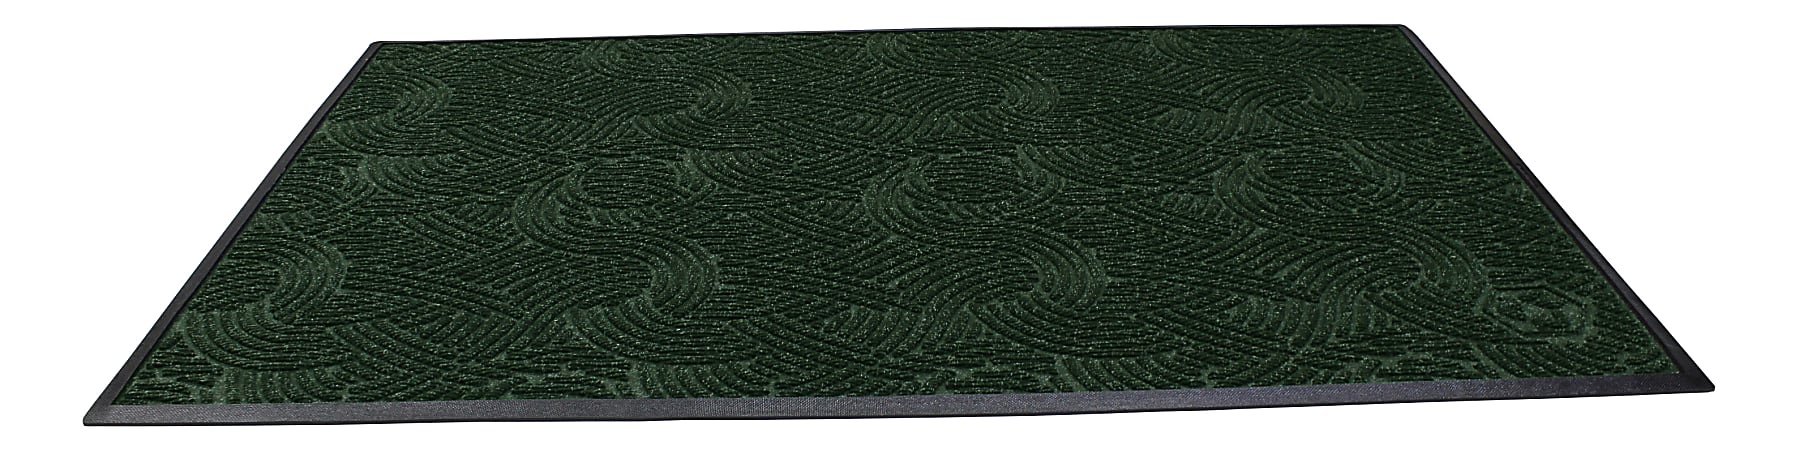 Waterhog Plus Swirl Floor Mat, 36" x 120", Southern Pine